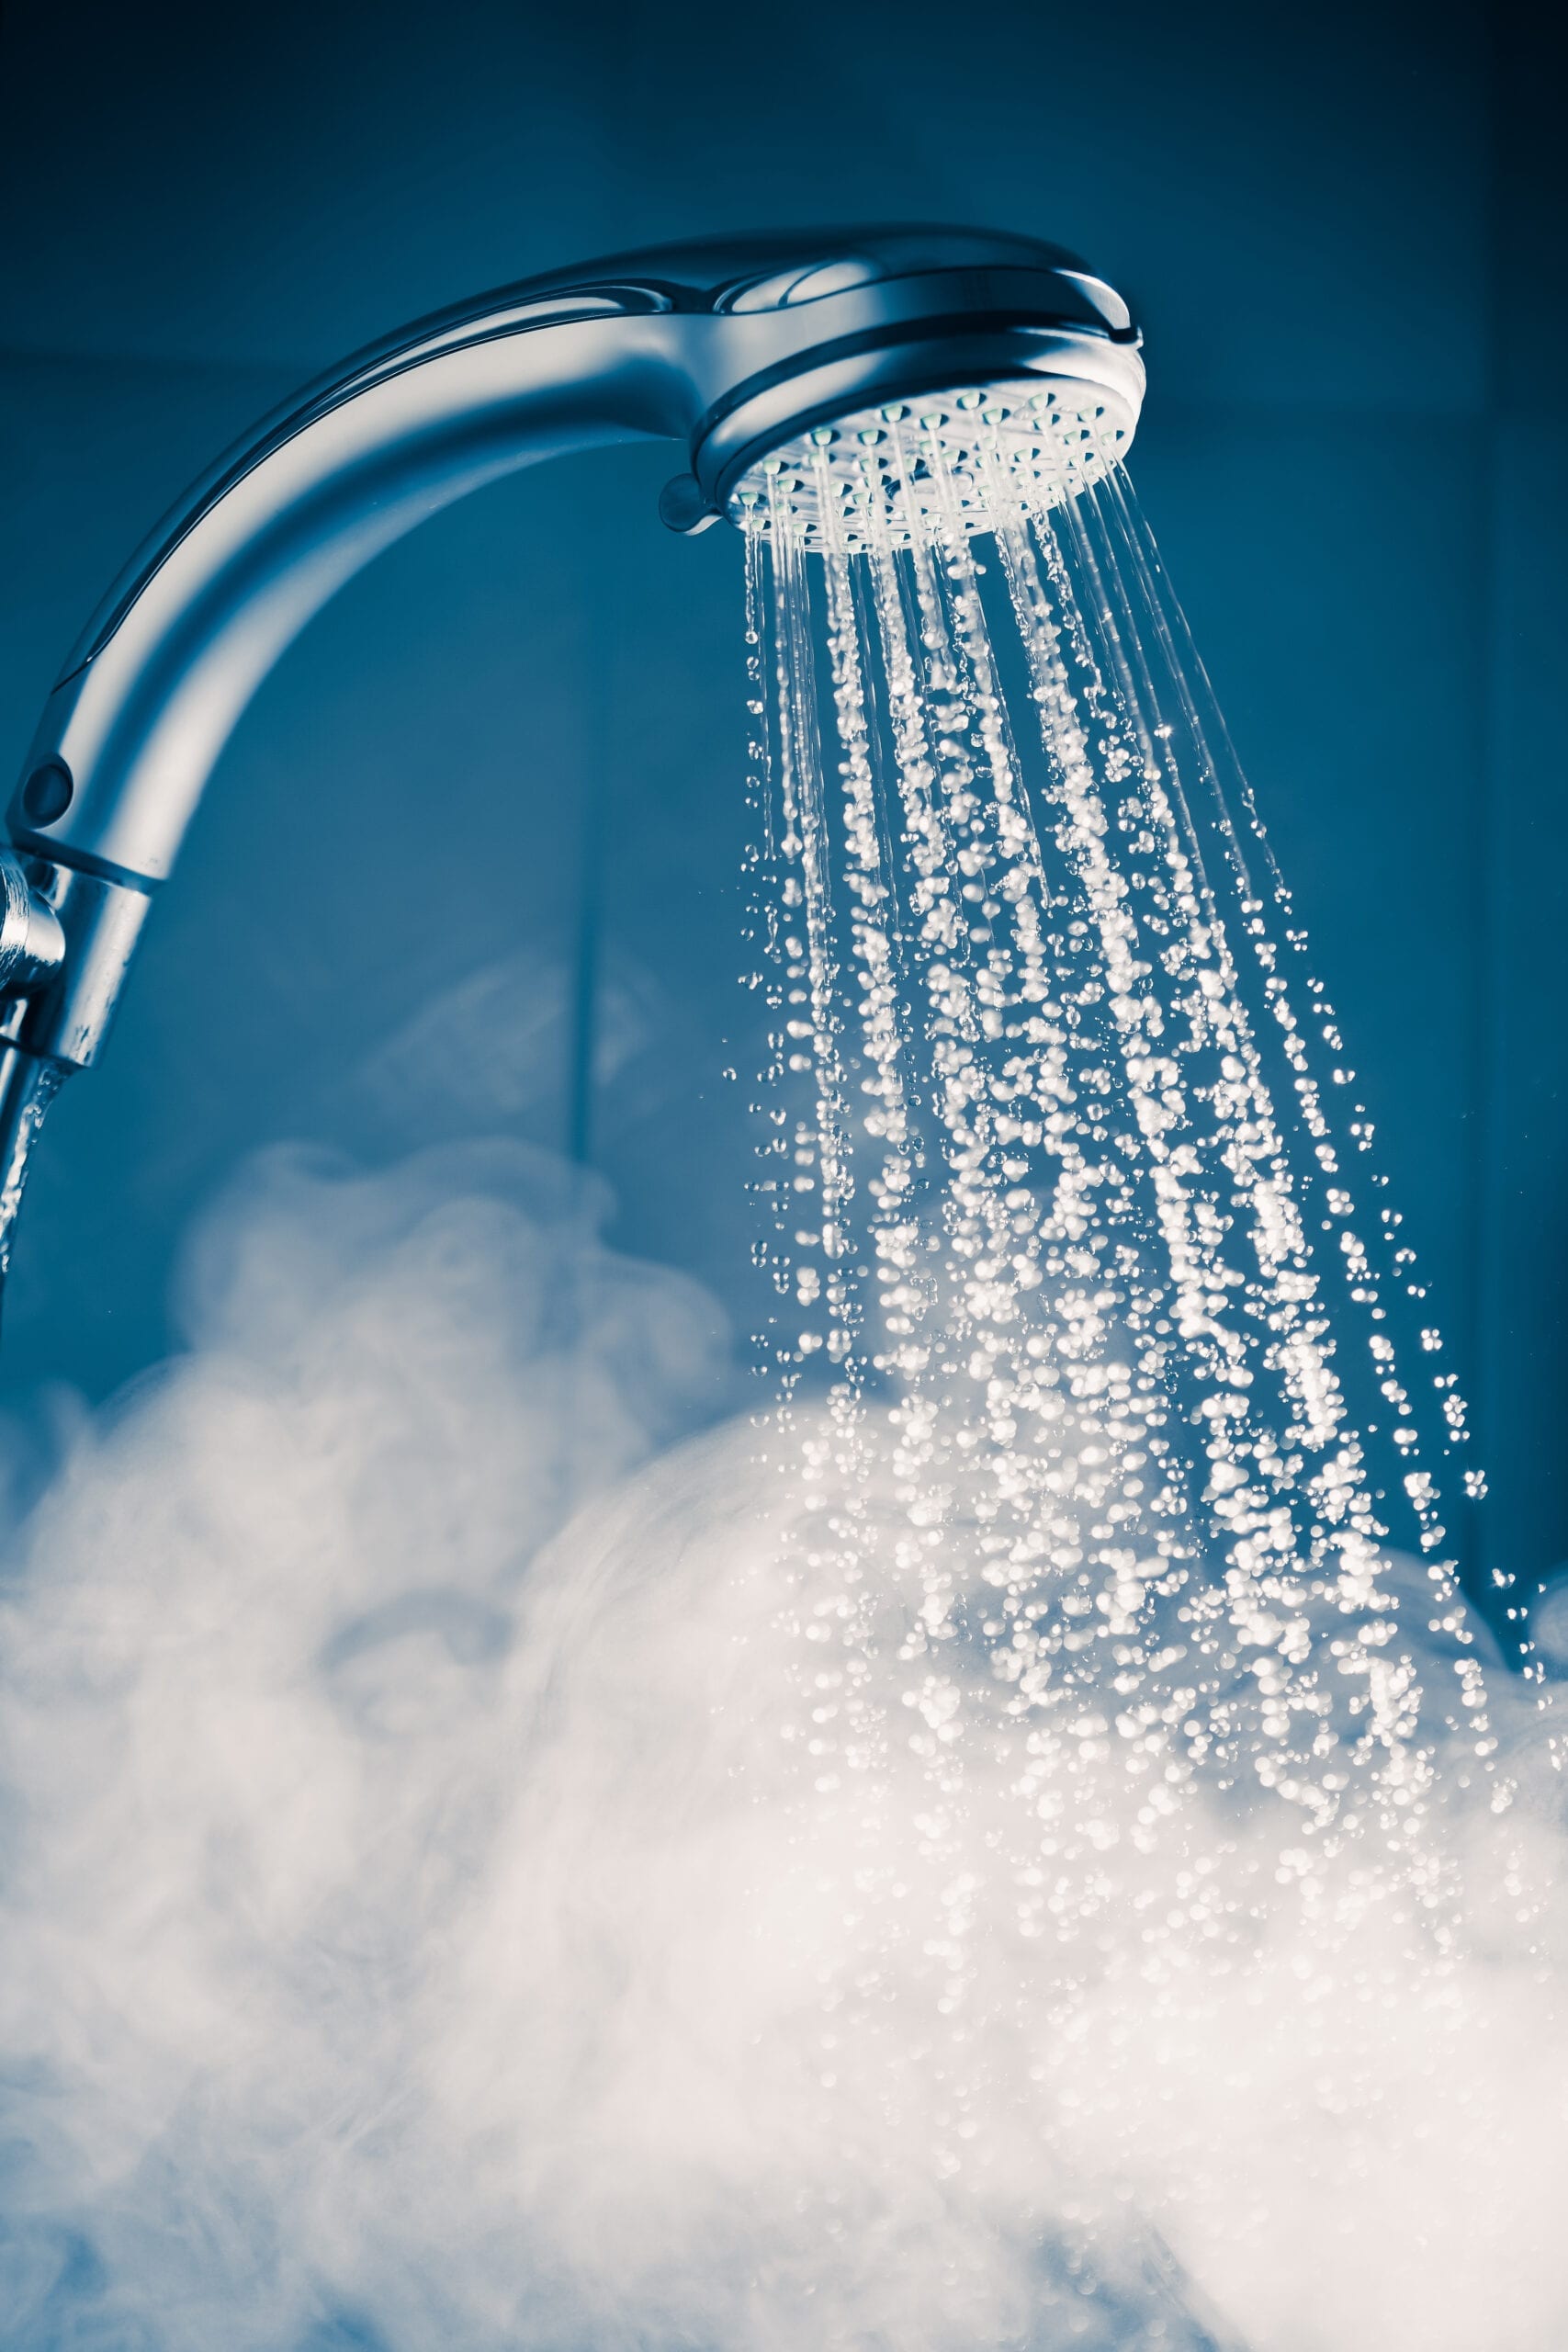 Water Heater makes a Hot Steamy Shower